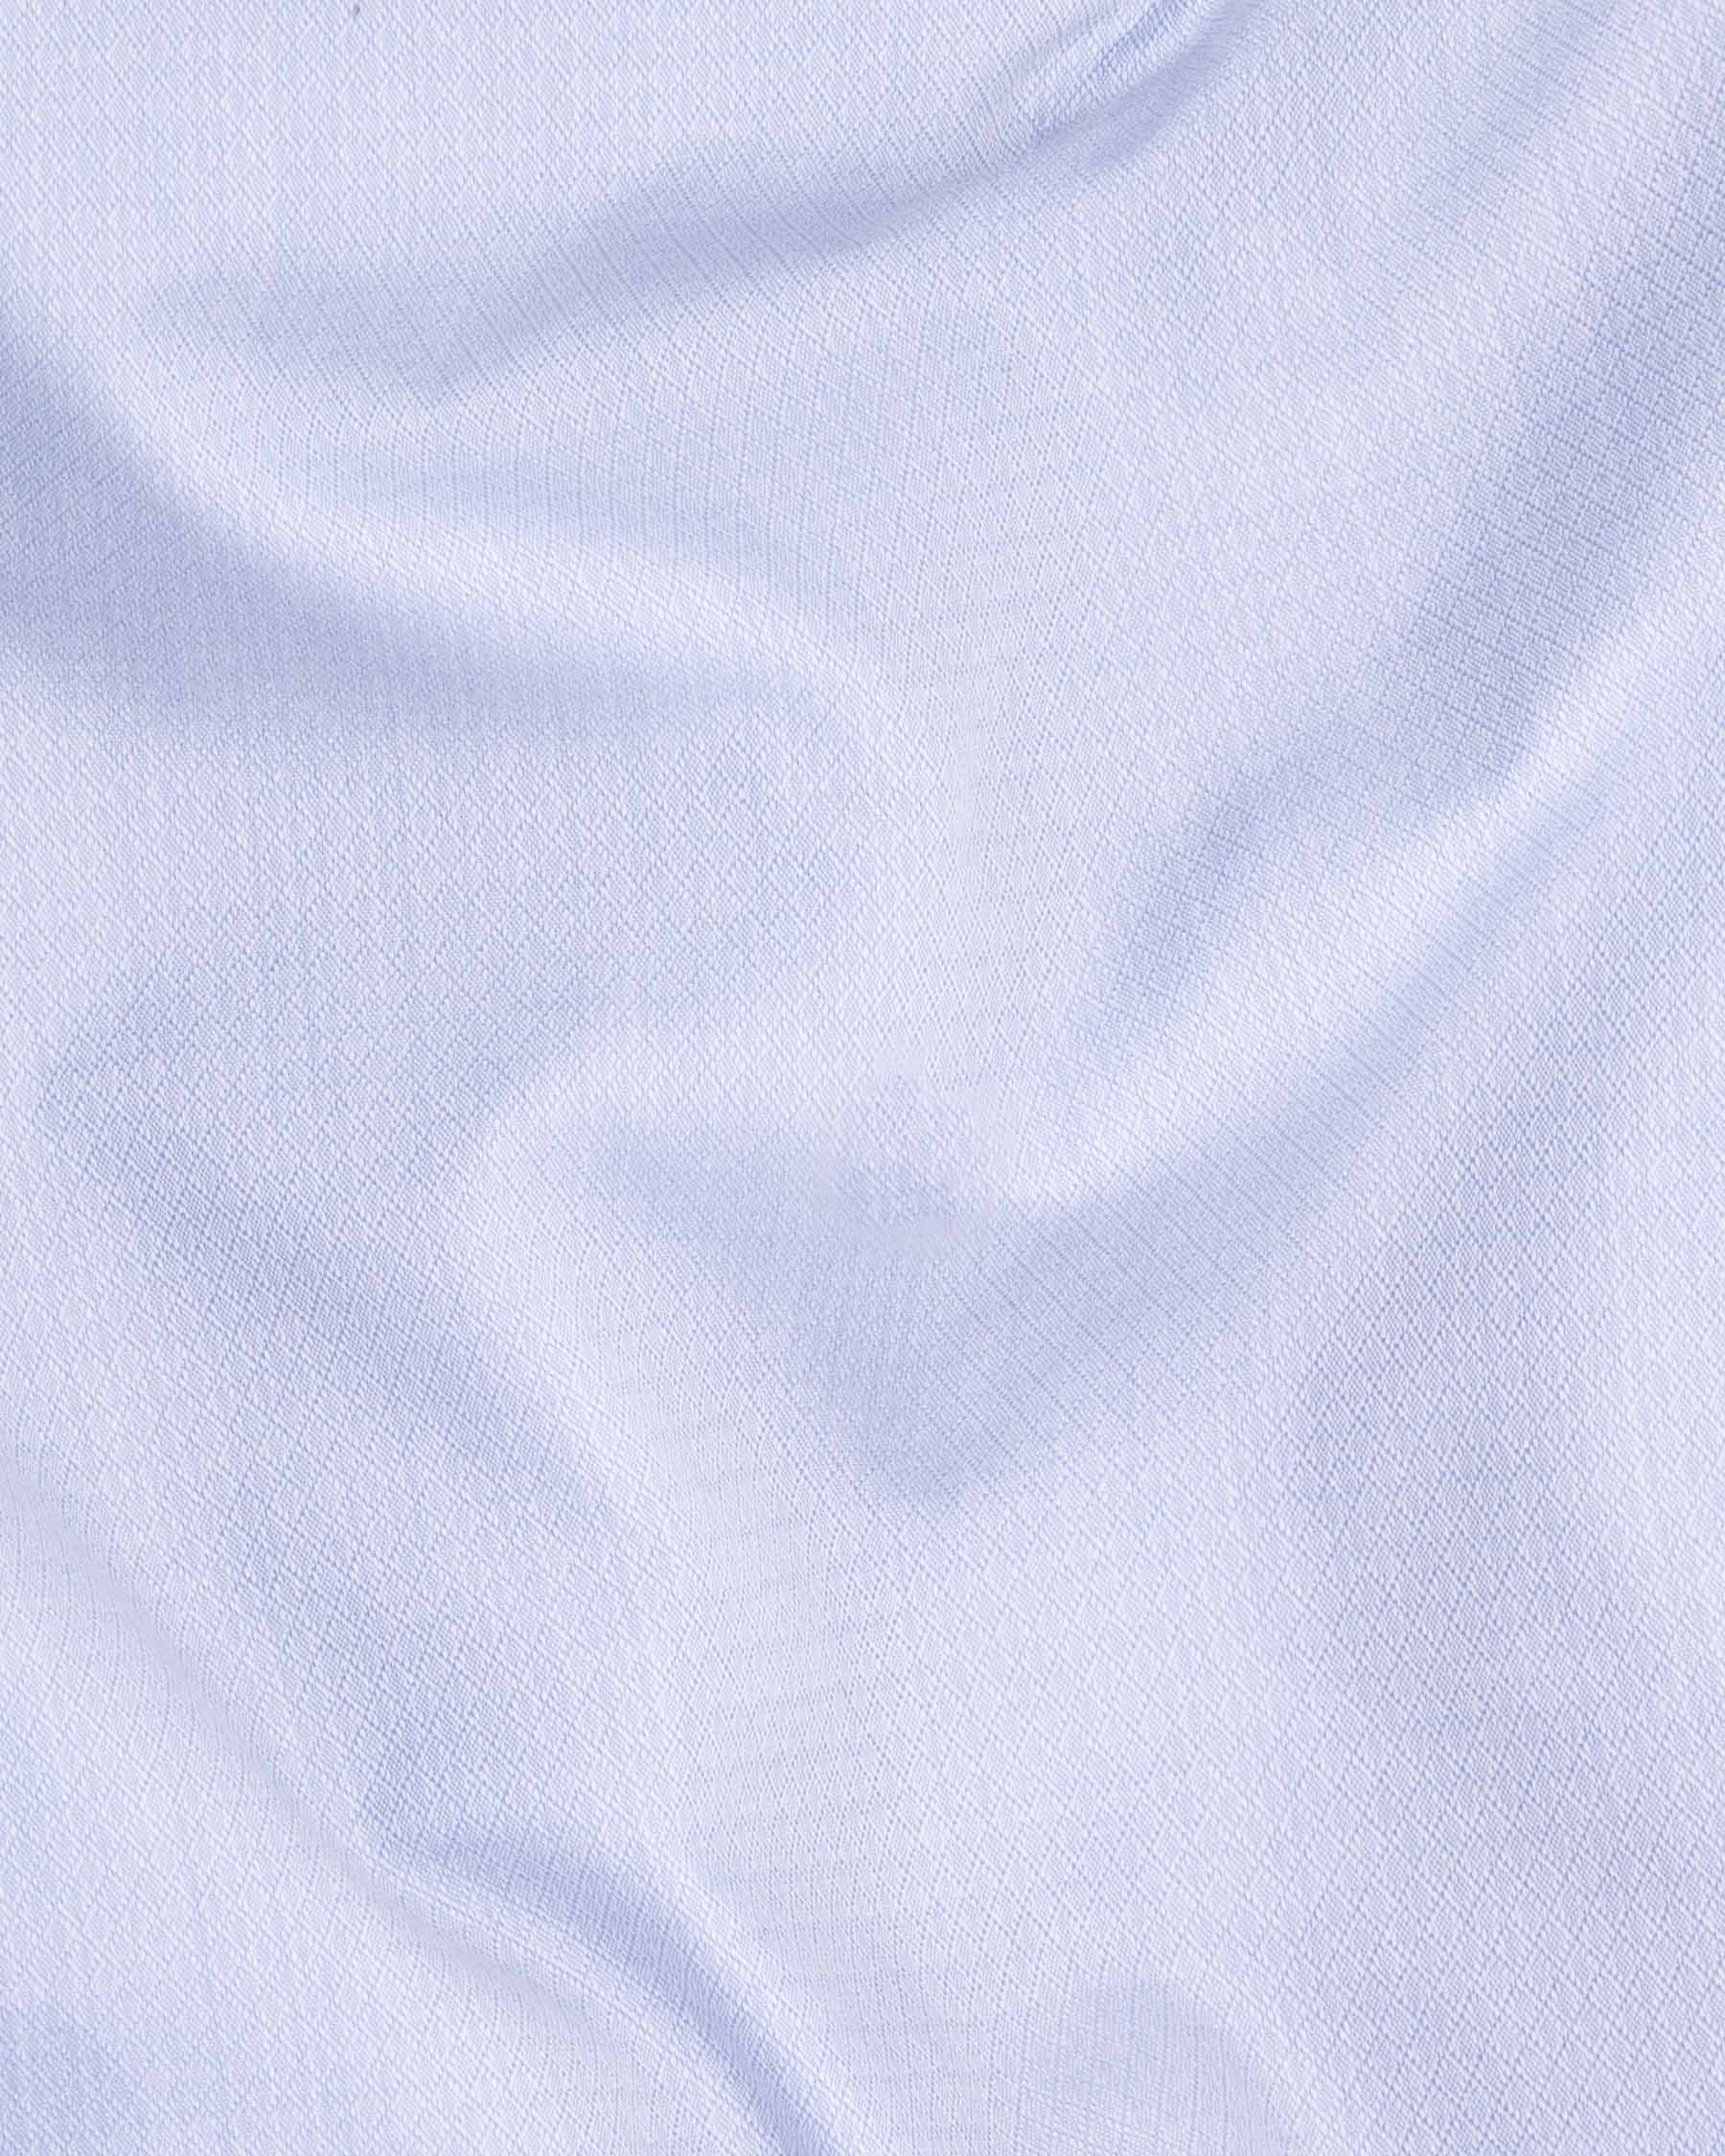 Hawkes Blue with White Collar Dobby Textured Premium Giza Cotton Shirt 5984-CA-WCC-38, 5984-CA-WCC-H-38, 5984-CA-WCC-39, 5984-CA-WCC-H-39, 5984-CA-WCC-40, 5984-CA-WCC-H-40, 5984-CA-WCC-42, 5984-CA-WCC-H-42, 5984-CA-WCC-44, 5984-CA-WCC-H-44, 5984-CA-WCC-46, 5984-CA-WCC-H-46, 5984-CA-WCC-48, 5984-CA-WCC-H-48, 5984-CA-WCC-50, 5984-CA-WCC-H-50, 5984-CA-WCC-52, 5984-CA-WCC-H-52